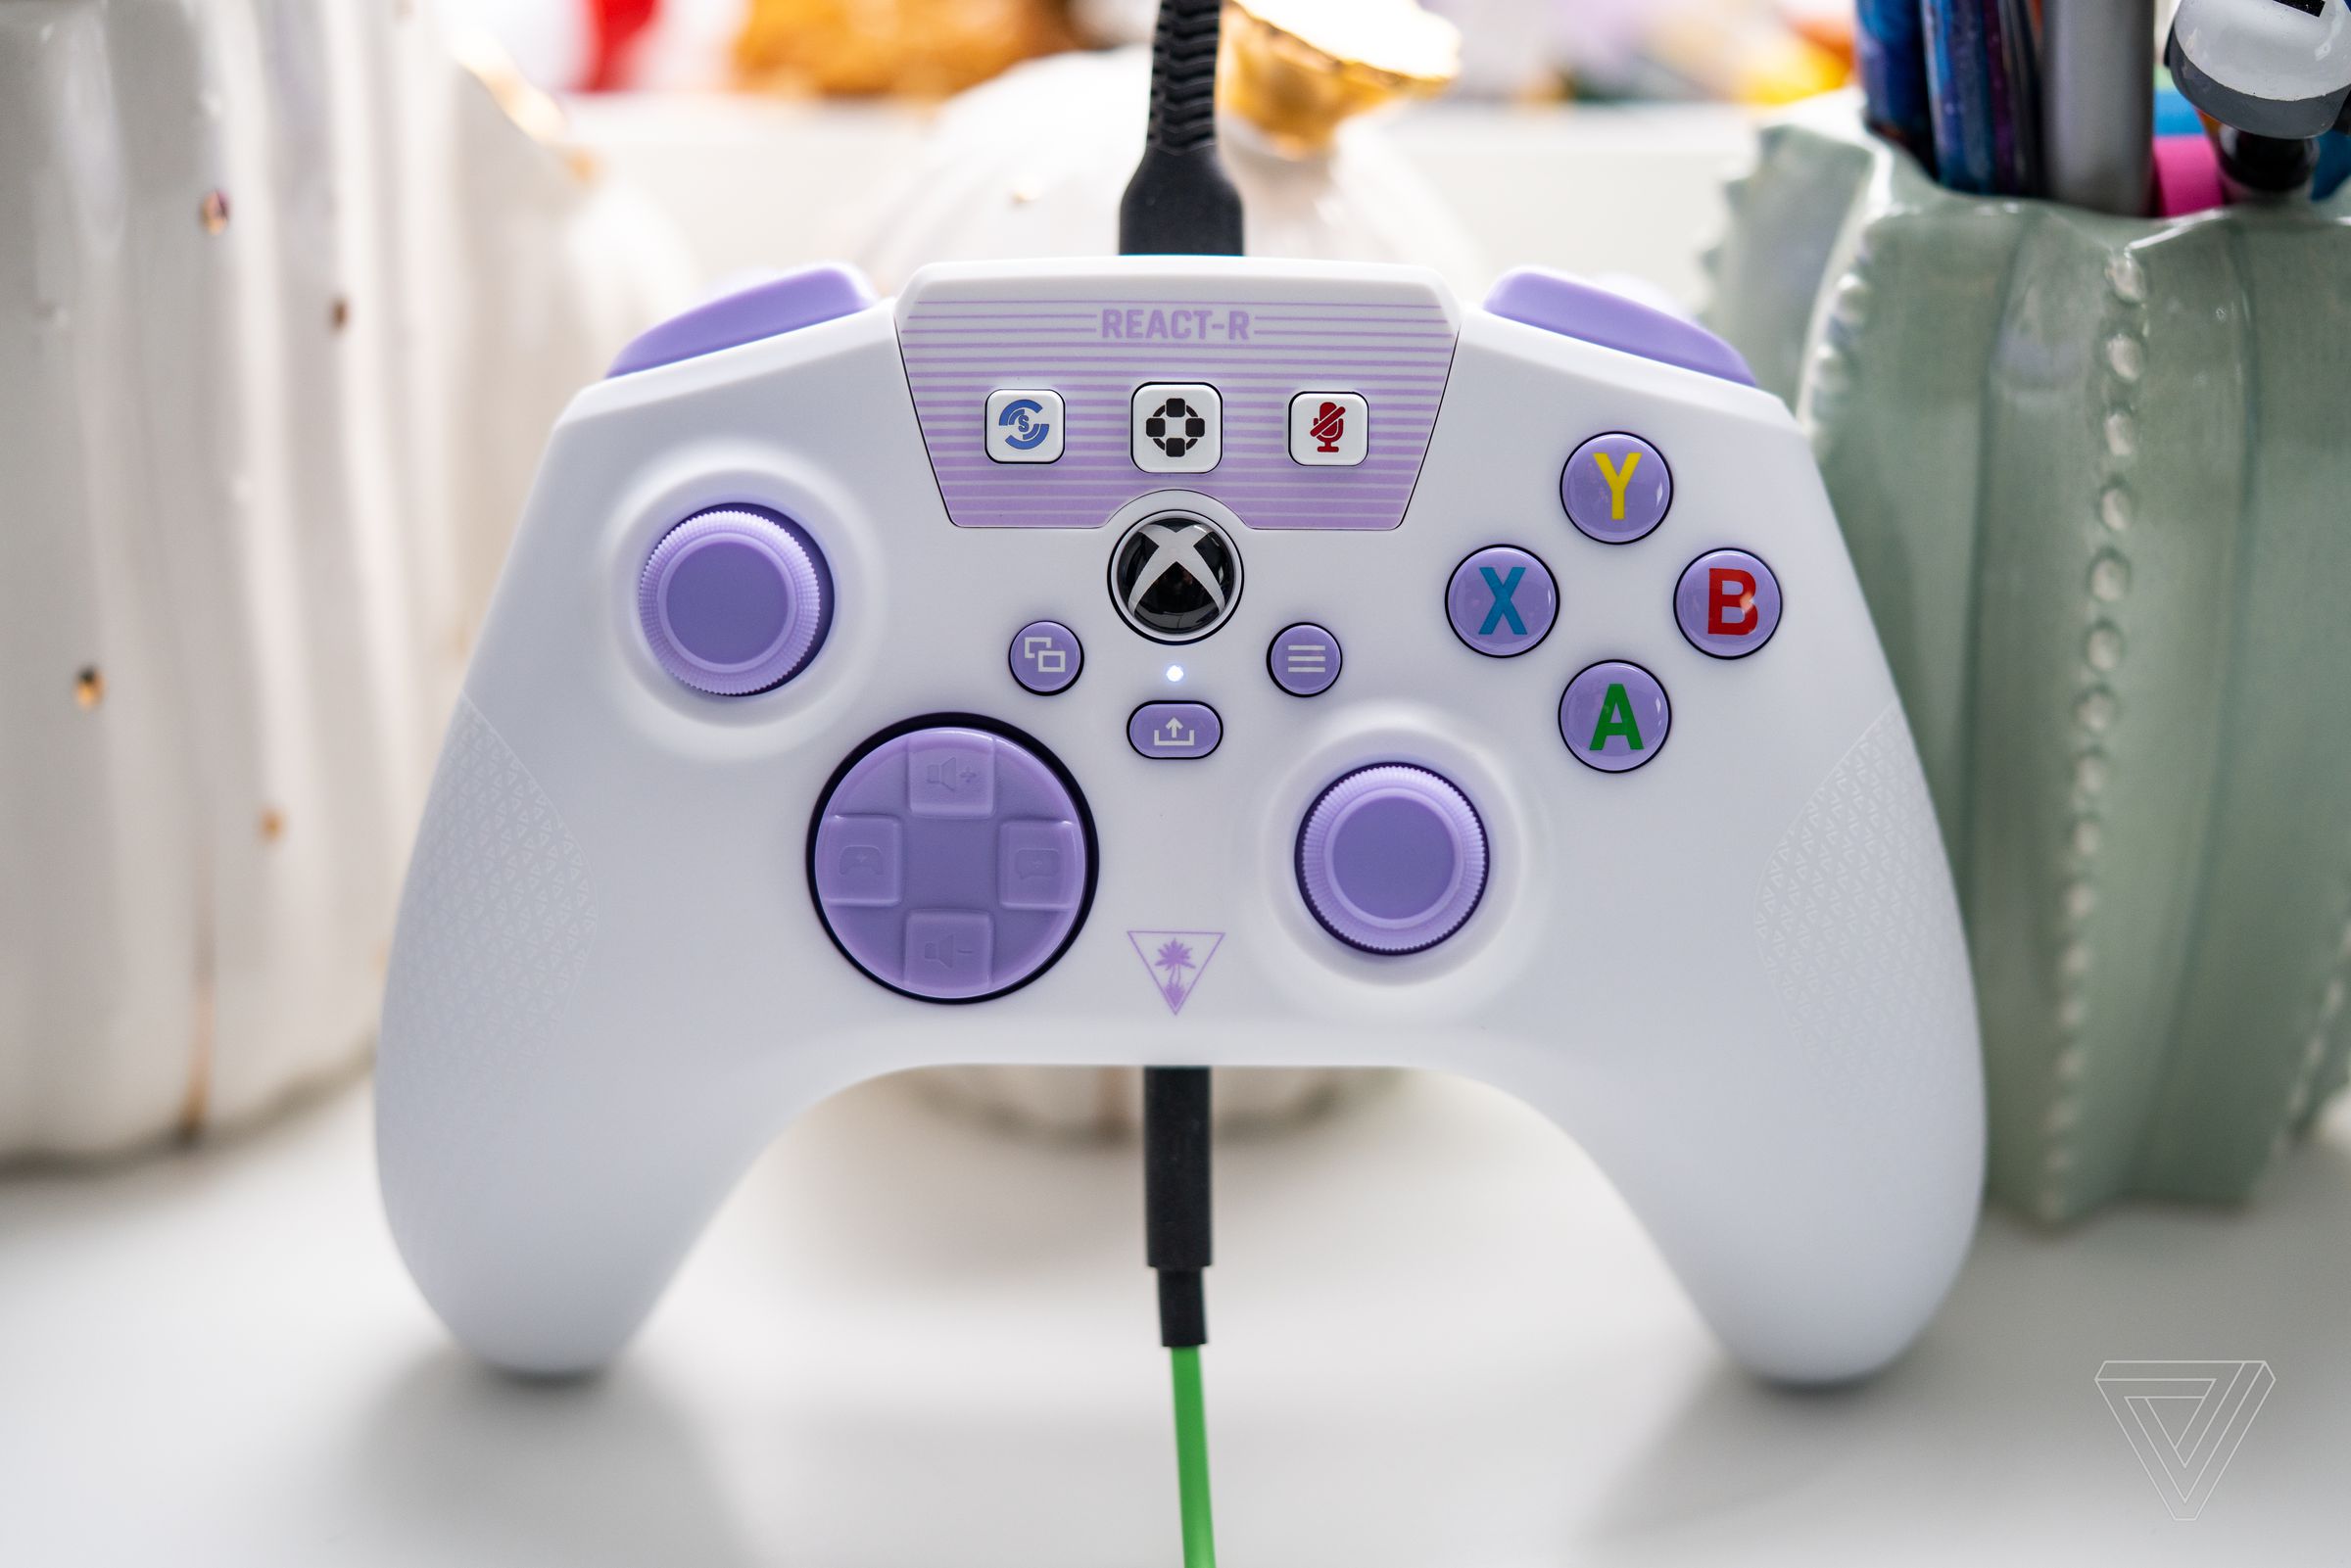 The Turtle Beach React-R Xbox controller in white / purple.